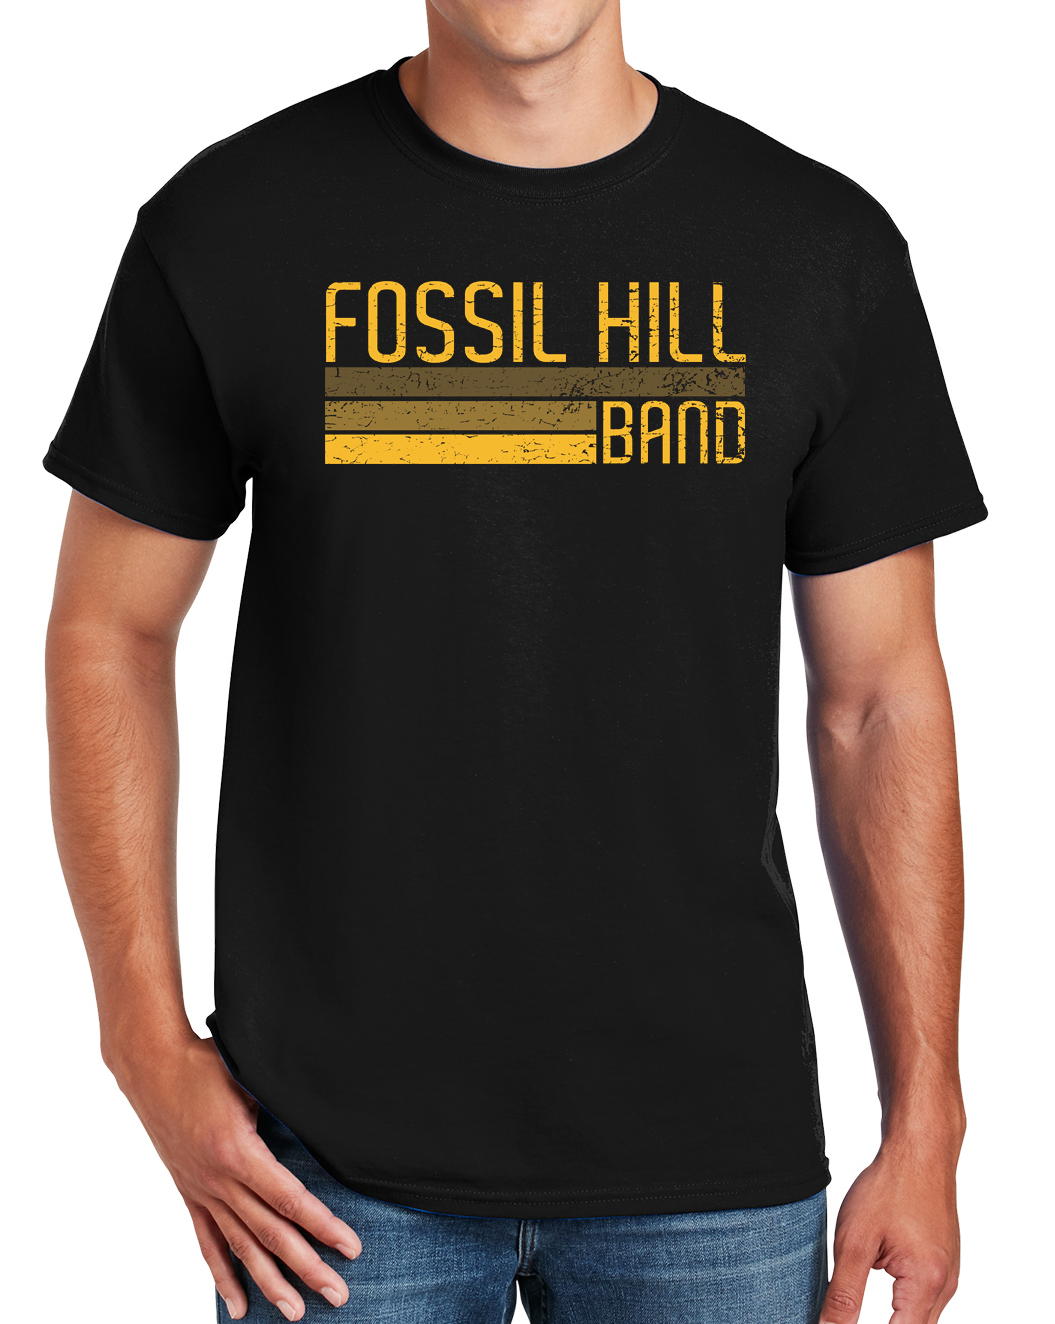 2023 Fossil Hill Band Short Sleeve Shirt